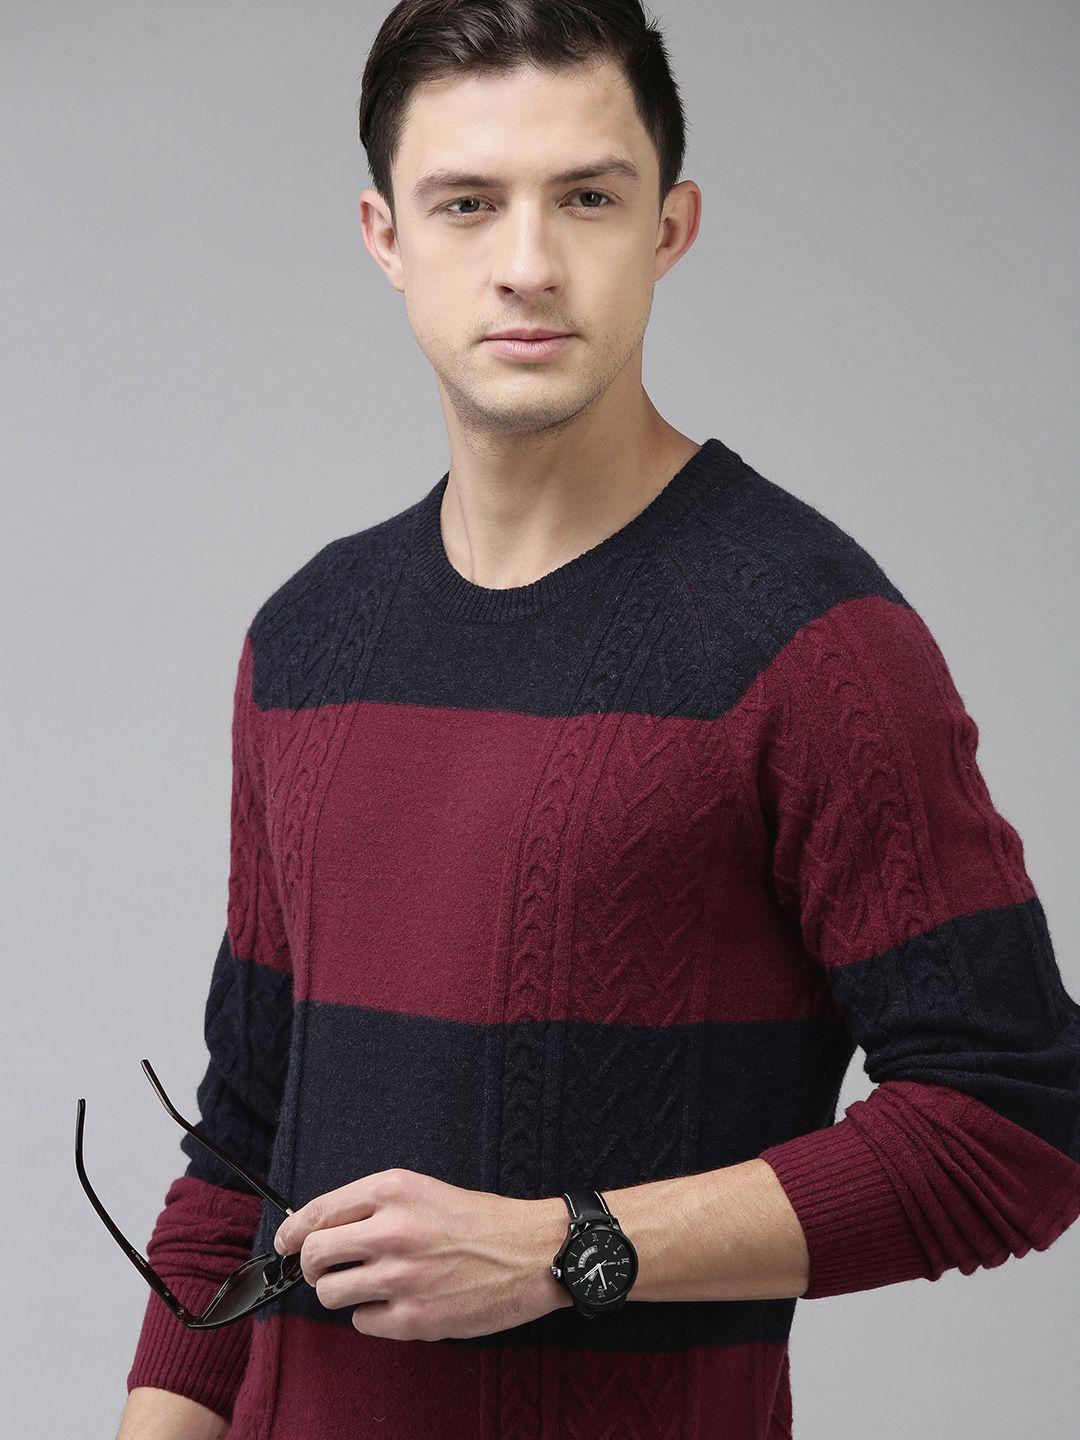 u s polo assn men navy blue & maroon colourblocked pullover sweater